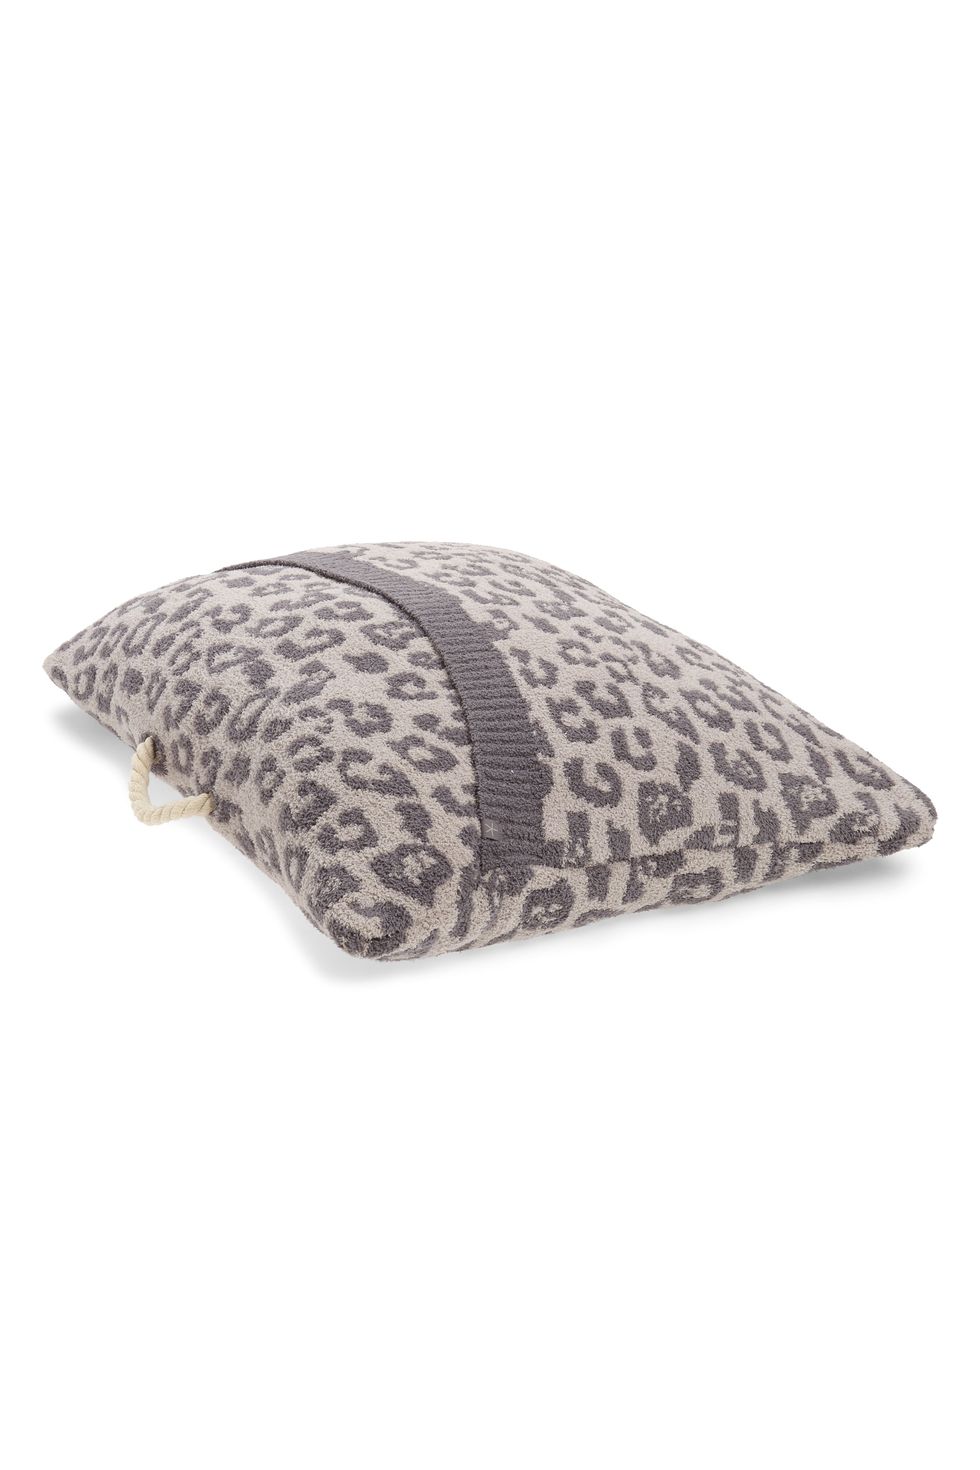 CozyChic™ Leopard Pet Bed